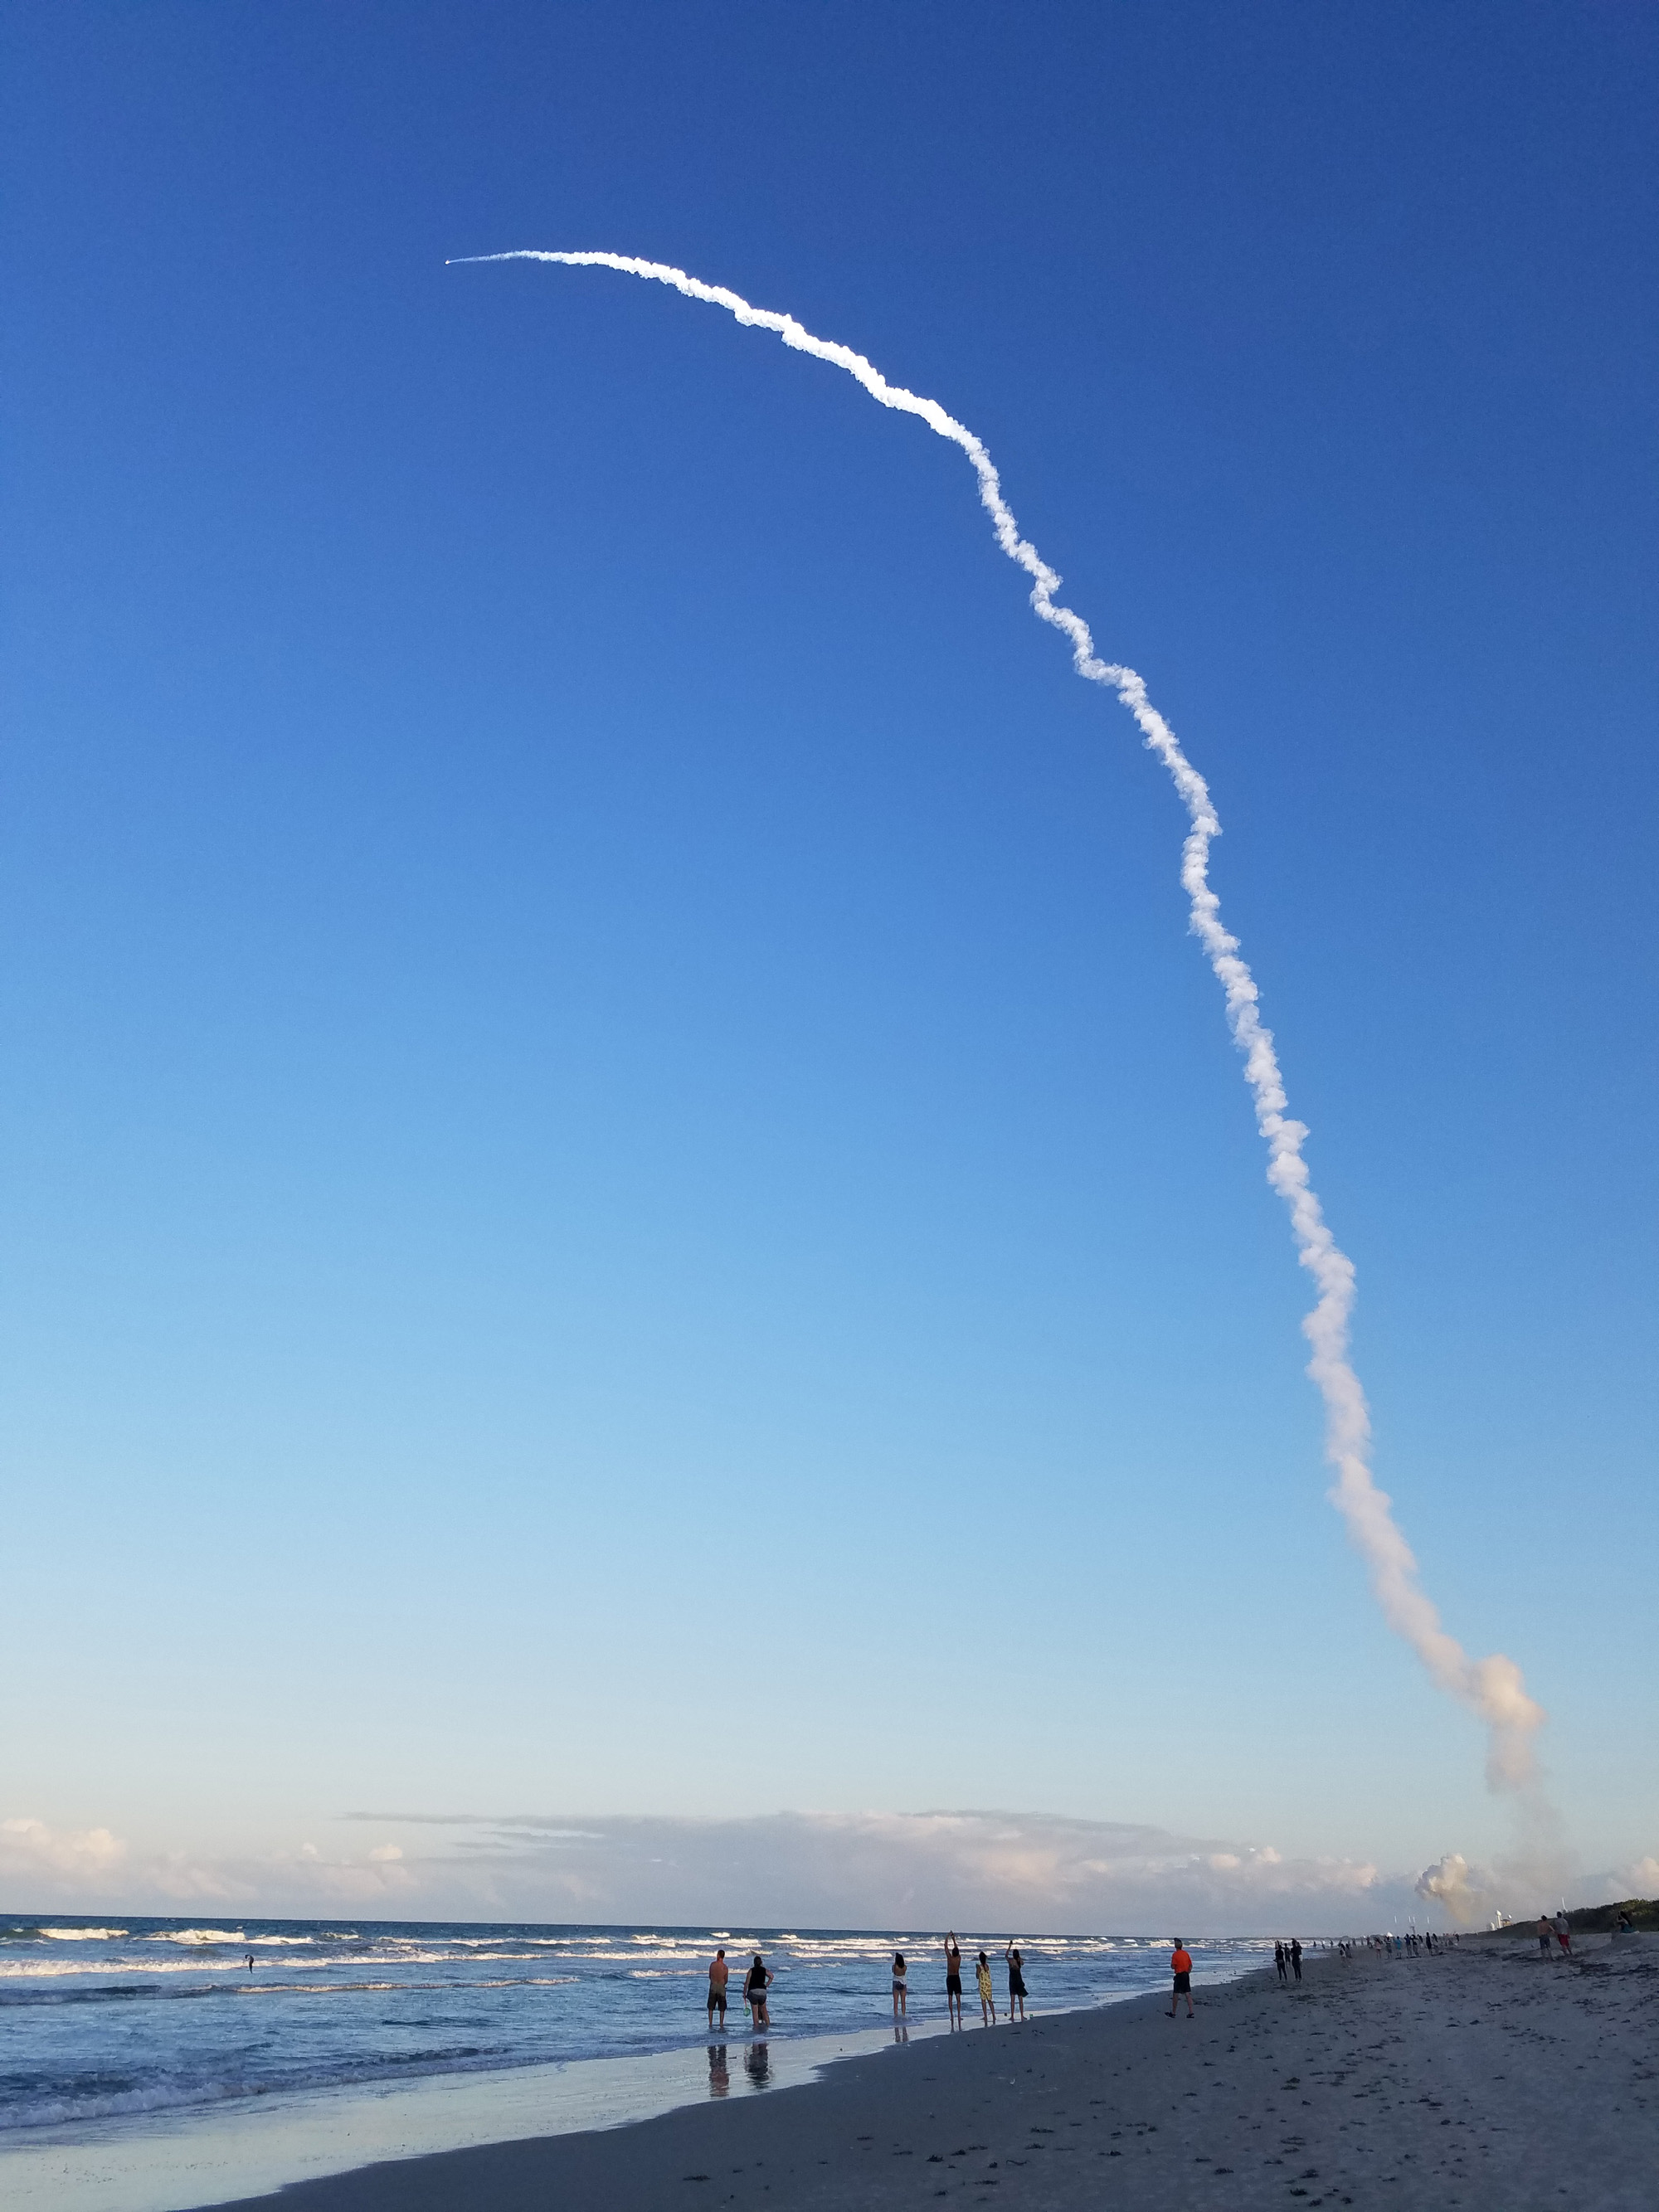 NASA’s OSIRIS-Rex asteroid sampling spacecraft streaks to orbit on September 8, 2016 from Cape Canaveral Air Force Station, FL as seen from Playalinda Beach.  Credit: Jillian Laudick